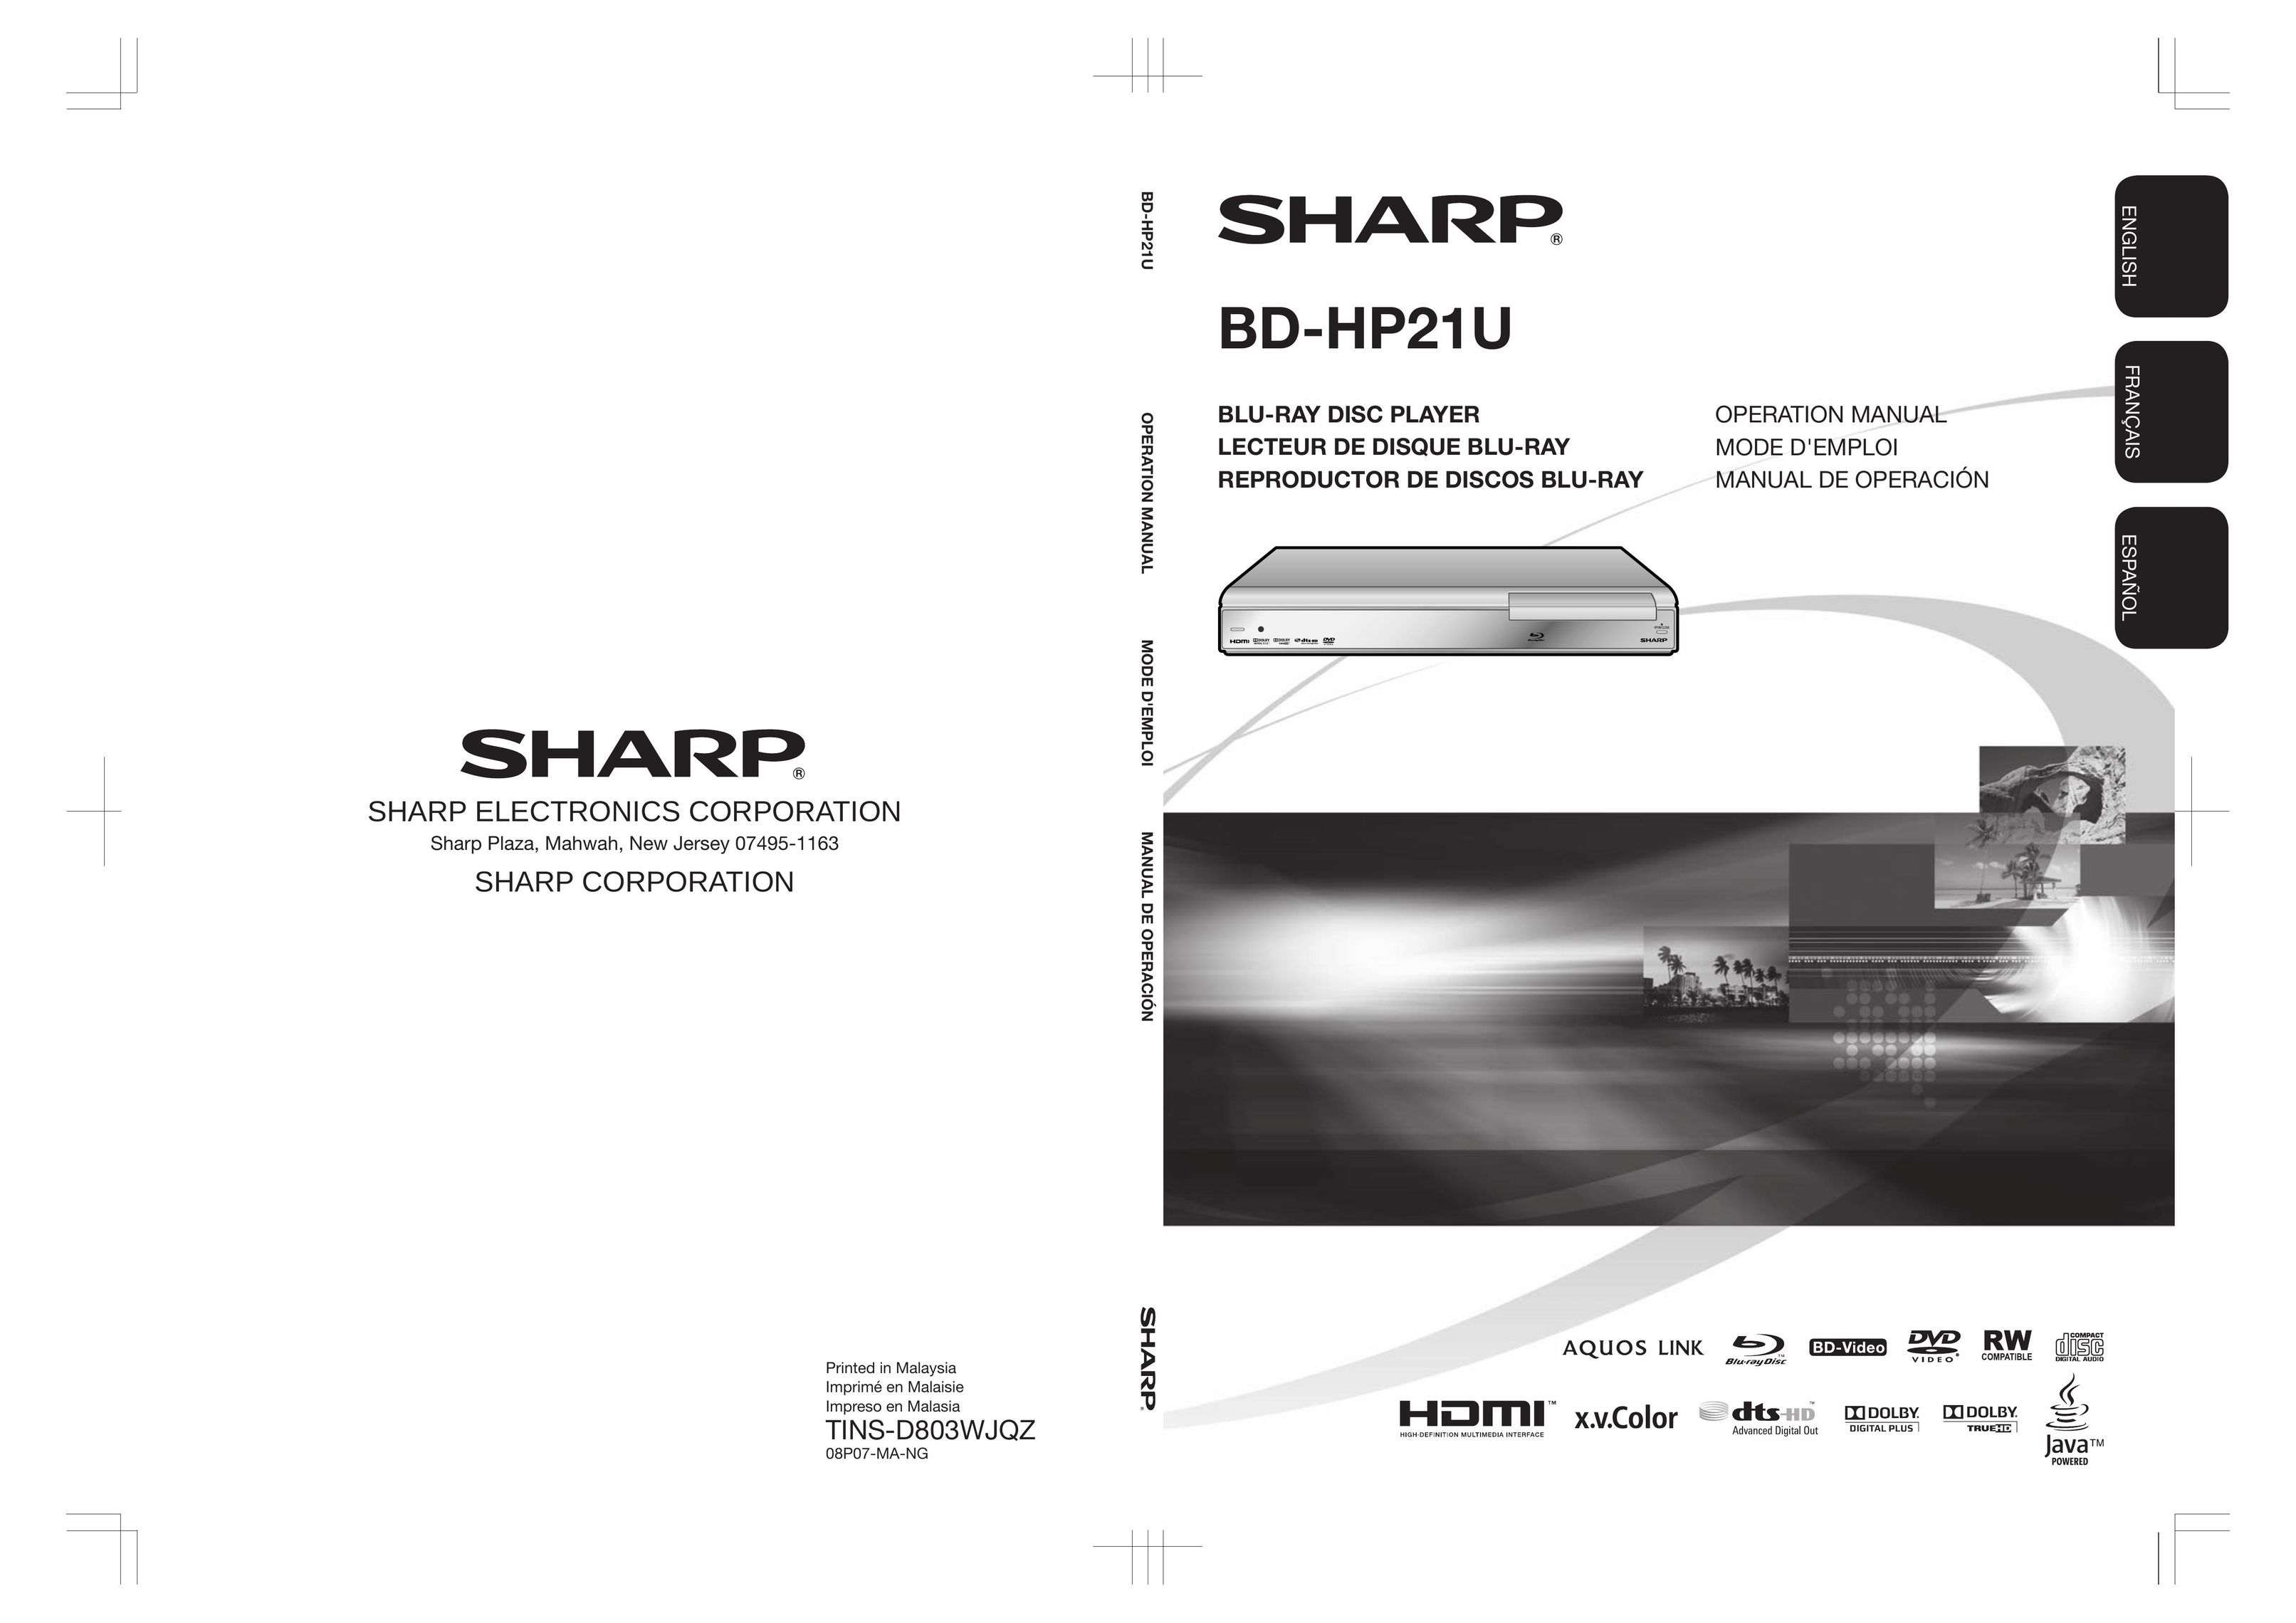 Sharp BD-HP21U Blu-ray Player User Manual